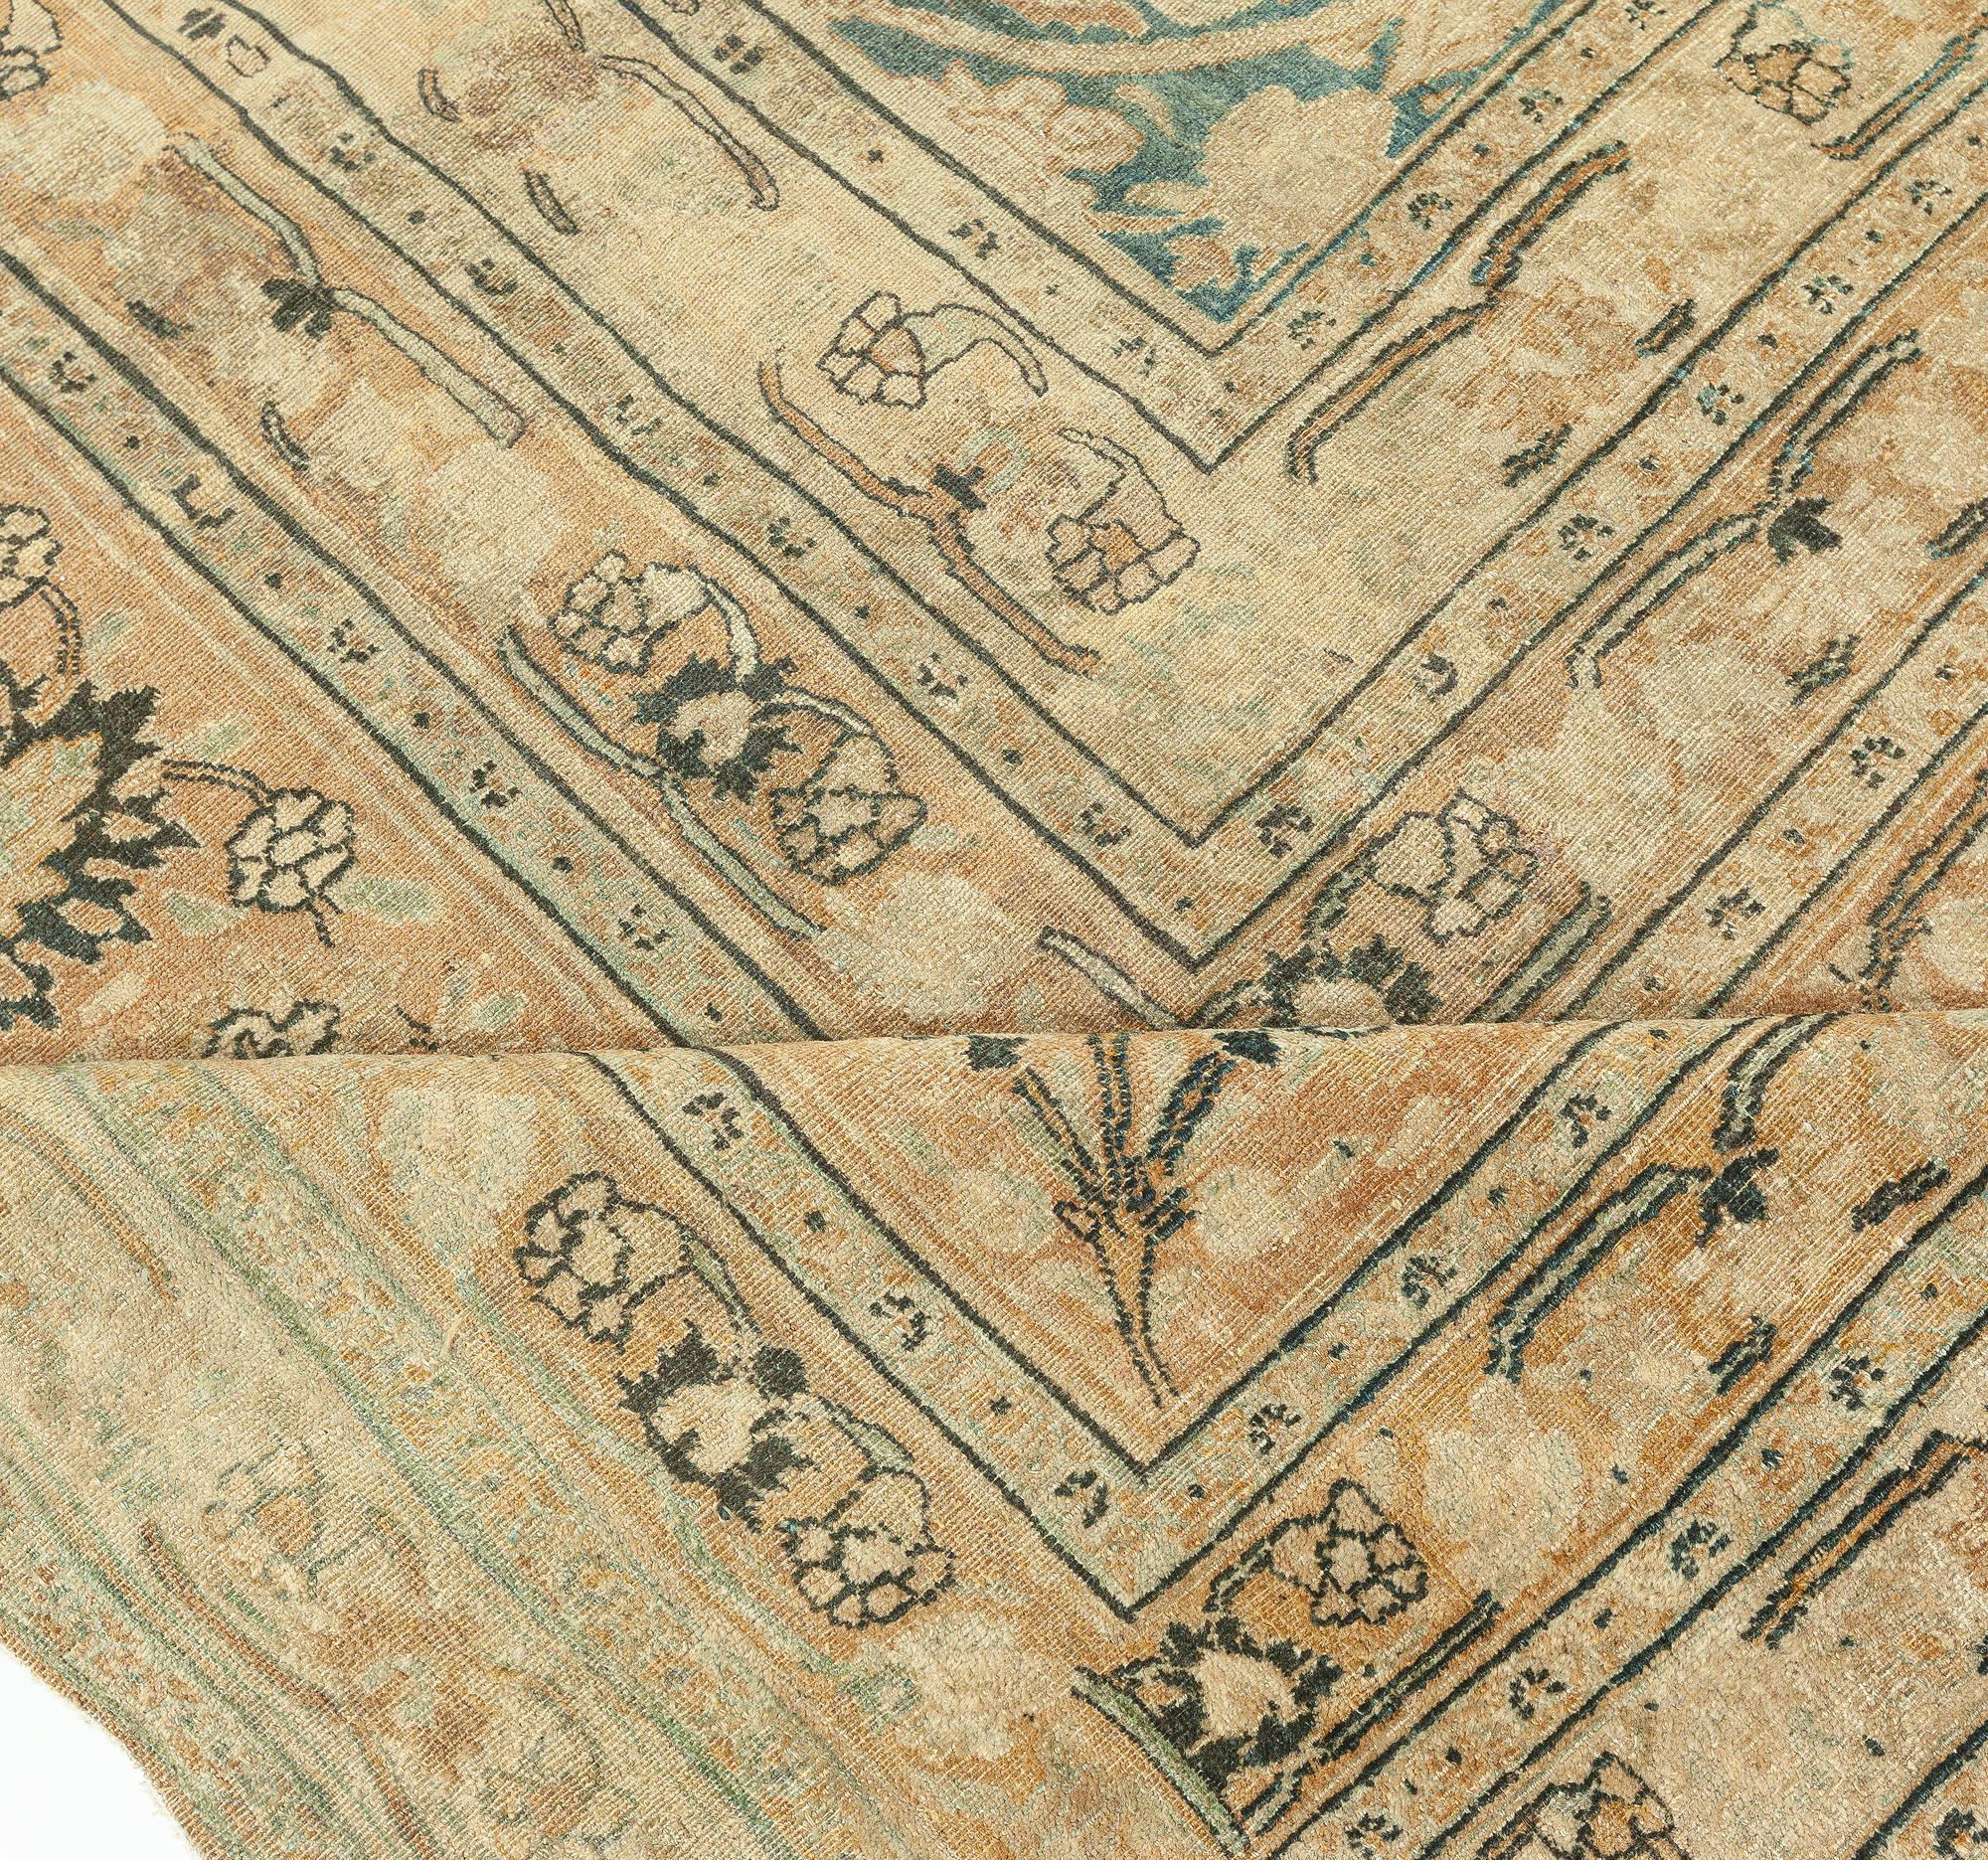 Antique Persian Khorassan rug
Size: 13'3